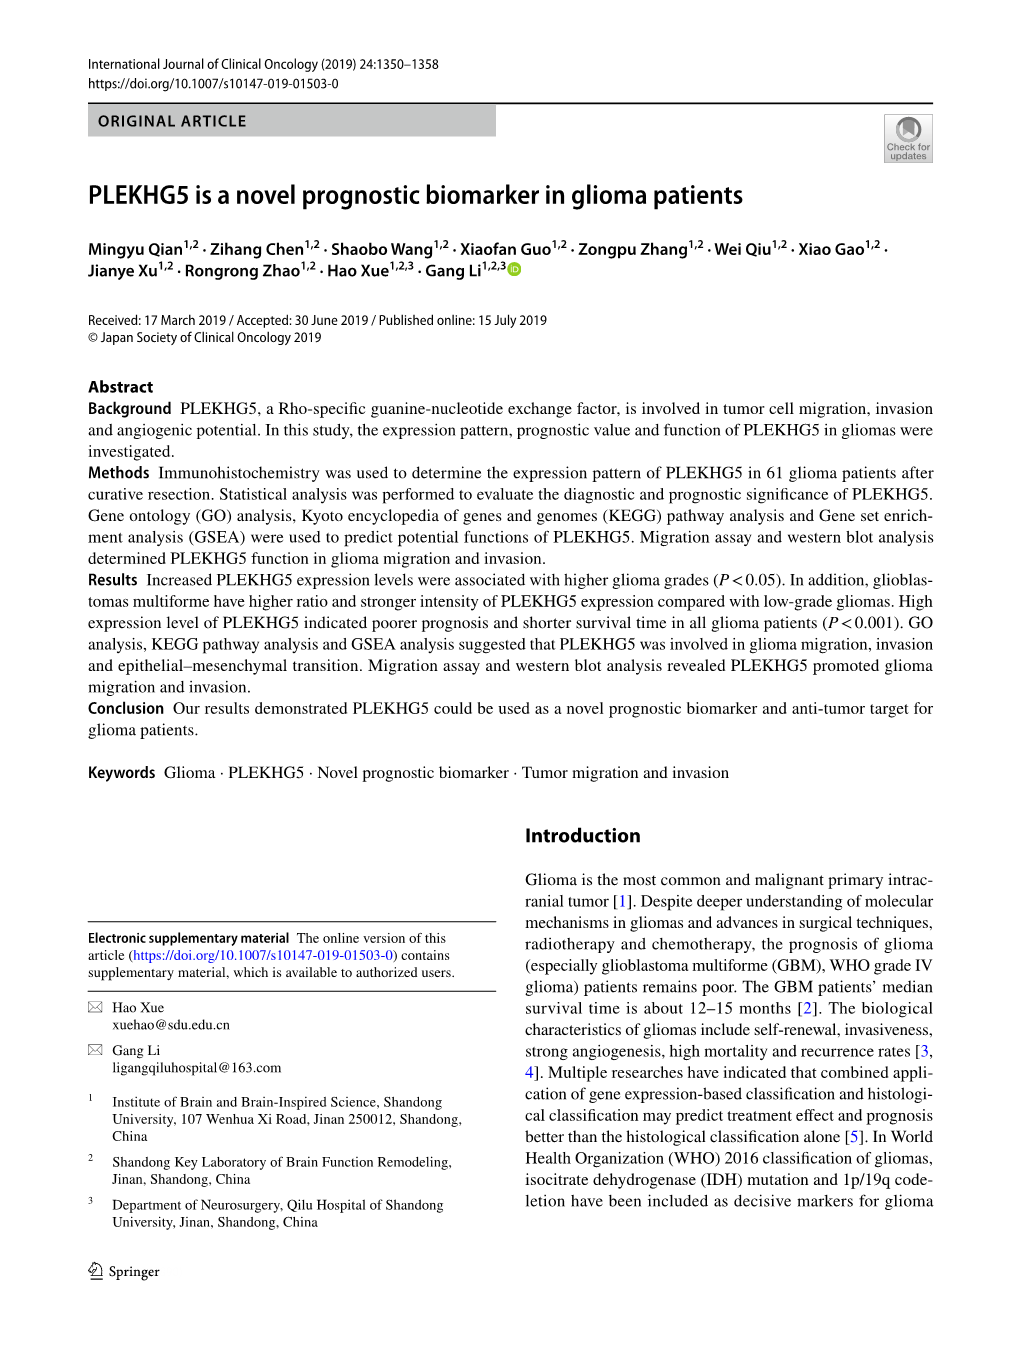 PLEKHG5 Is a Novel Prognostic Biomarker in Glioma Patients